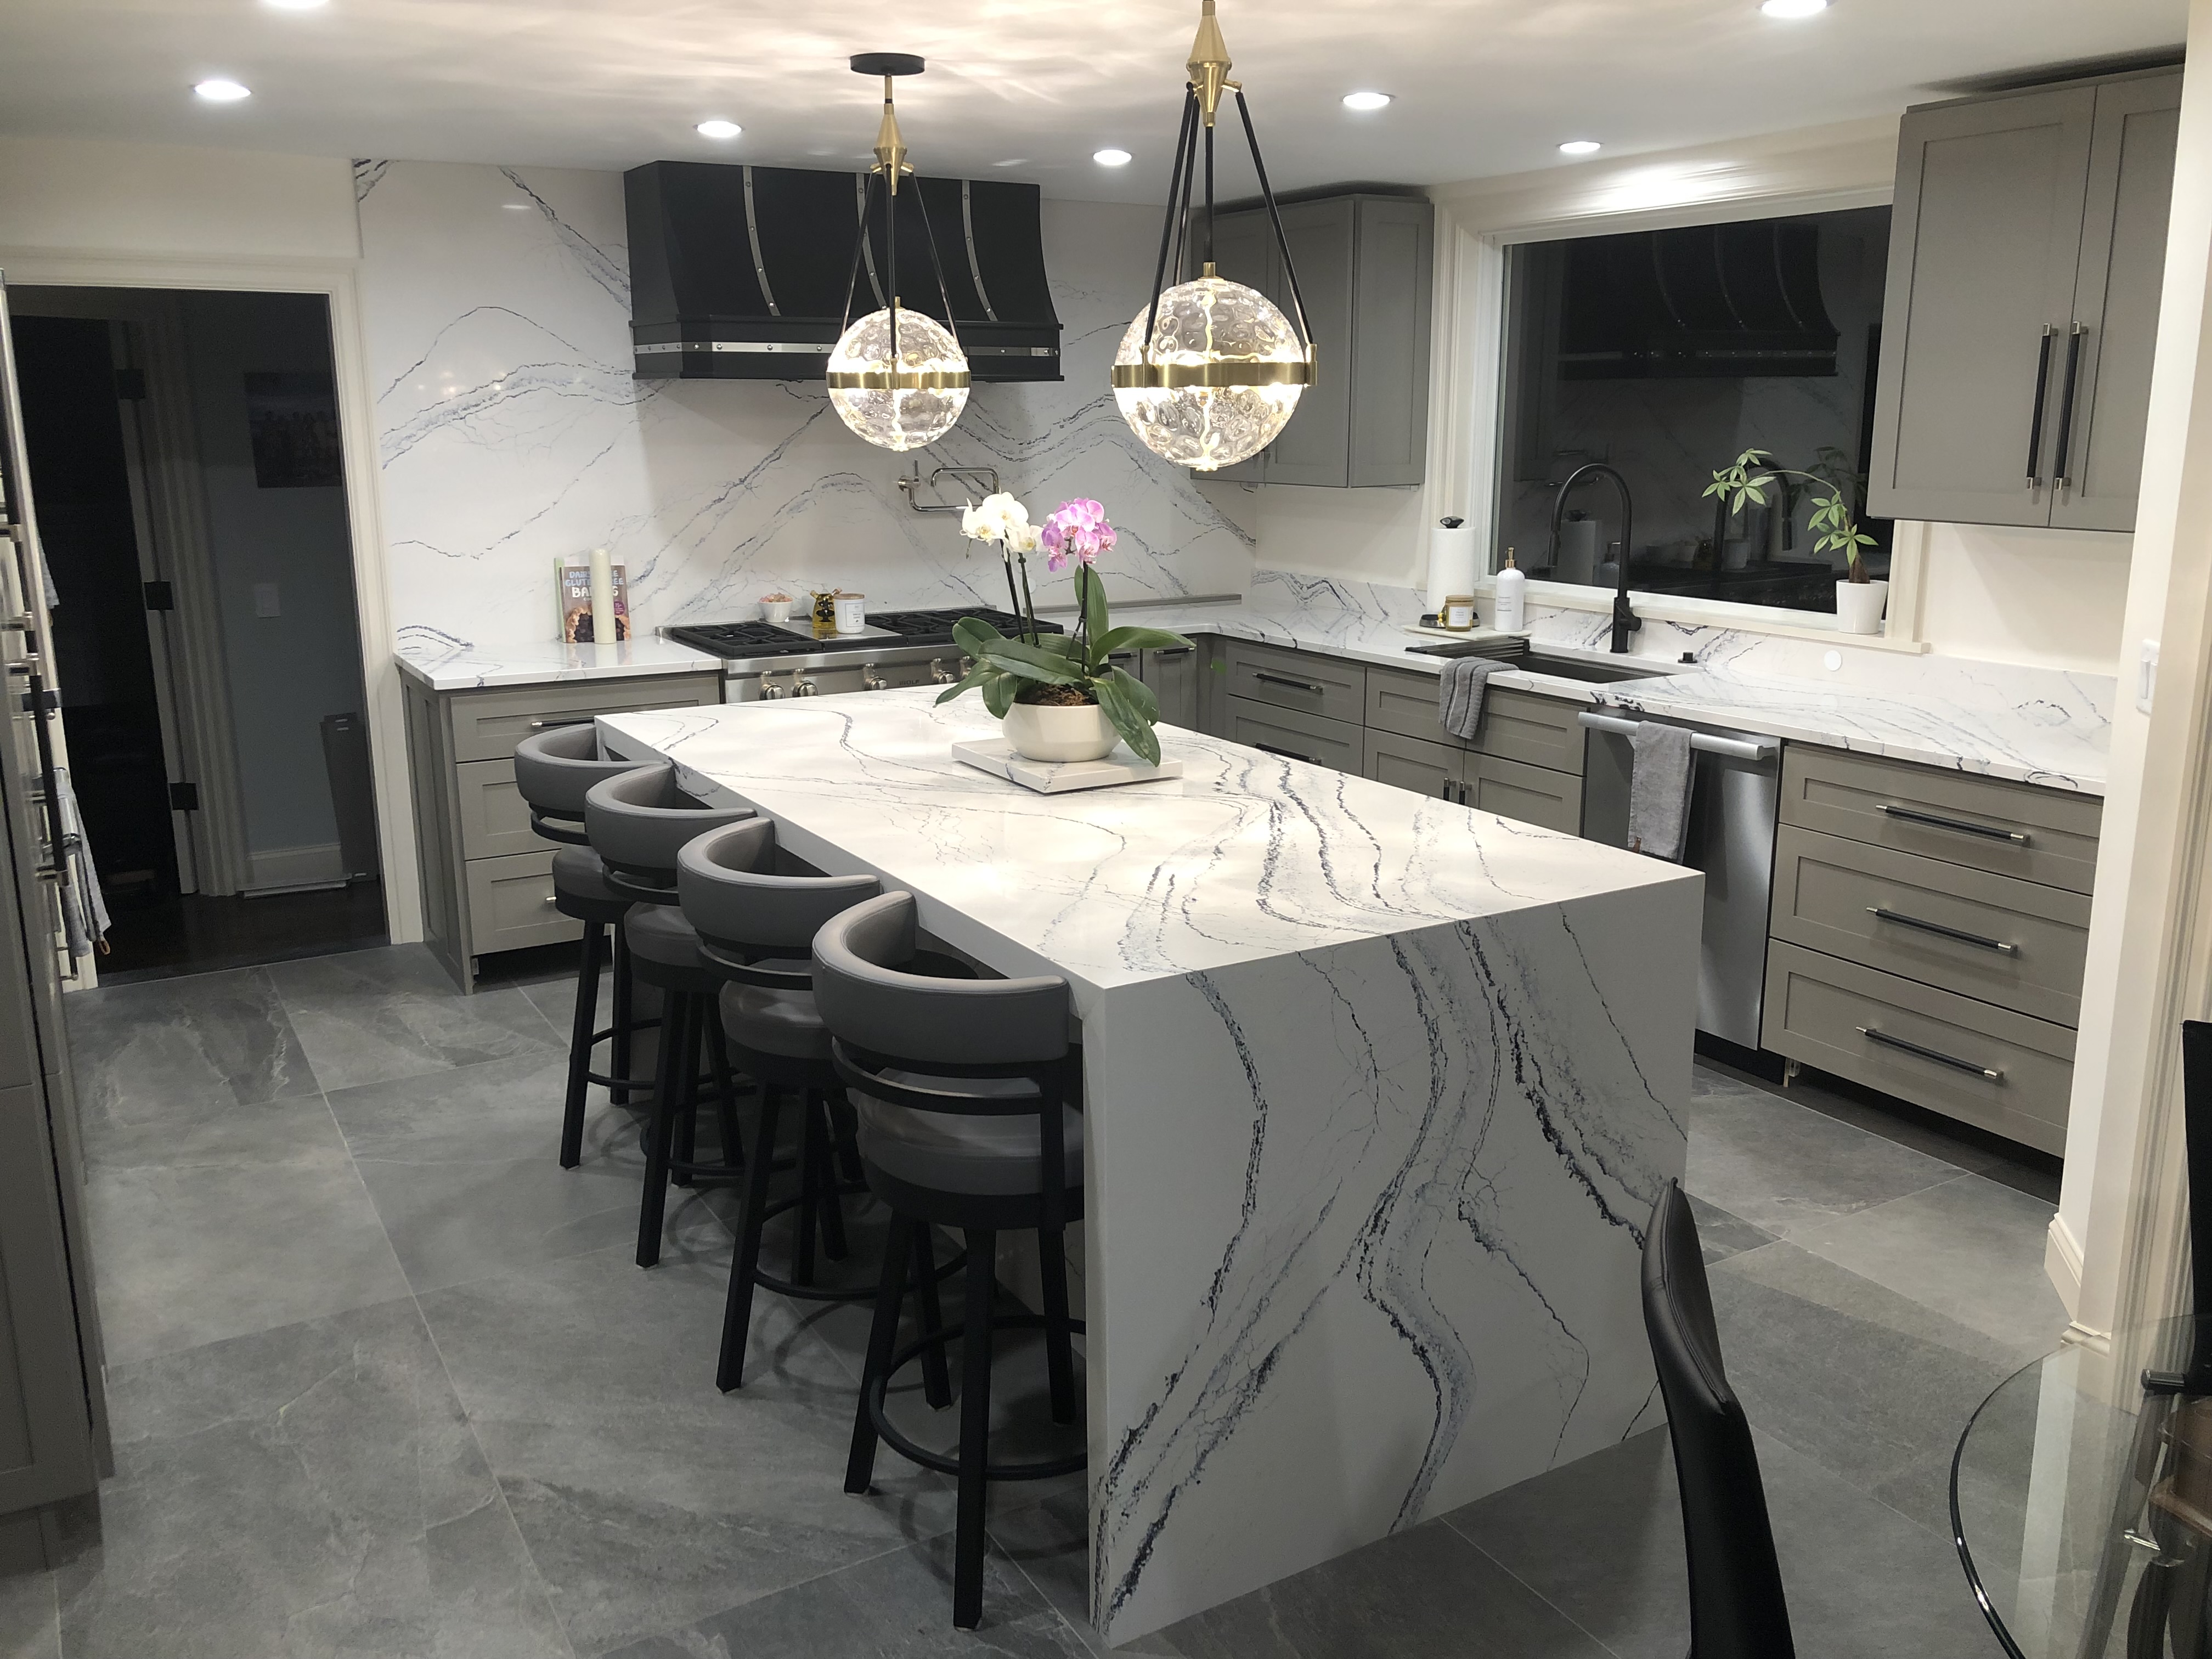 Inspiring kitchen table idea french kitchen design featuring white kitchen cabinets, luxurious marble kitchen countertops, beautiful marble backsplash